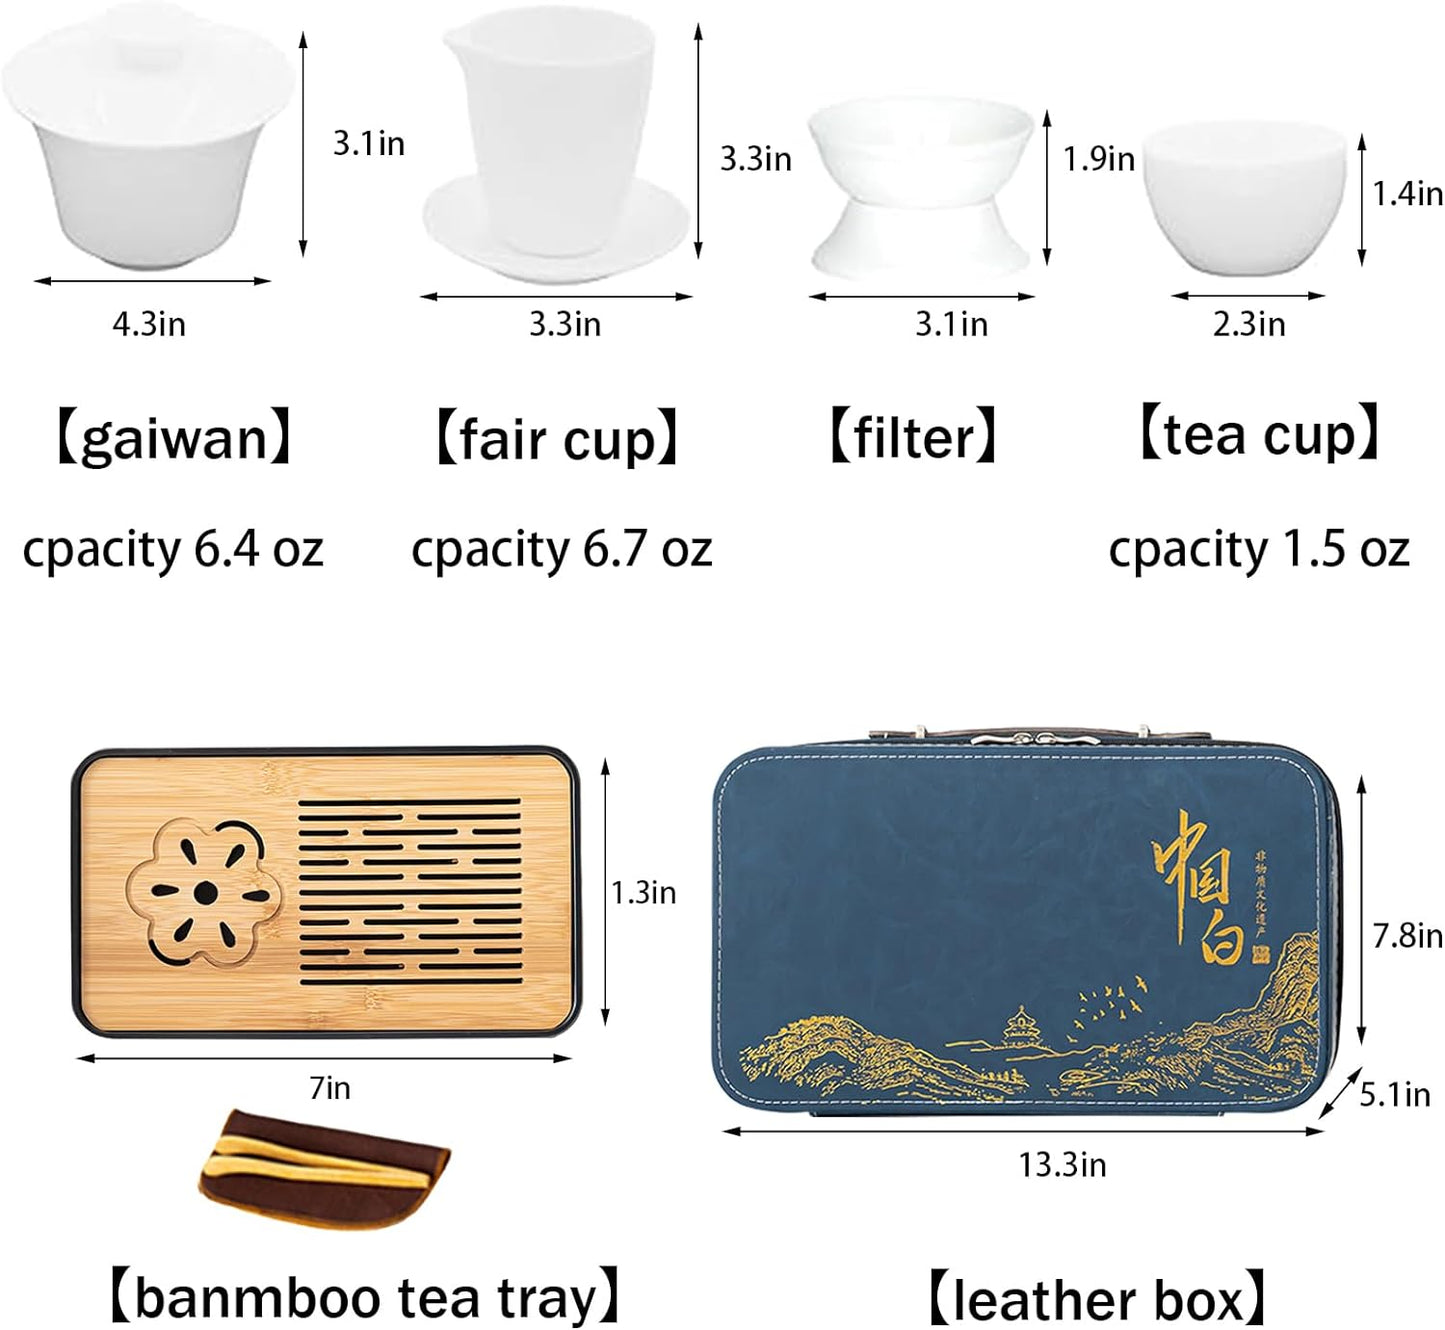 Asian Kungfu Ceramic Tea Set - Portable, 13-Piece for Adults